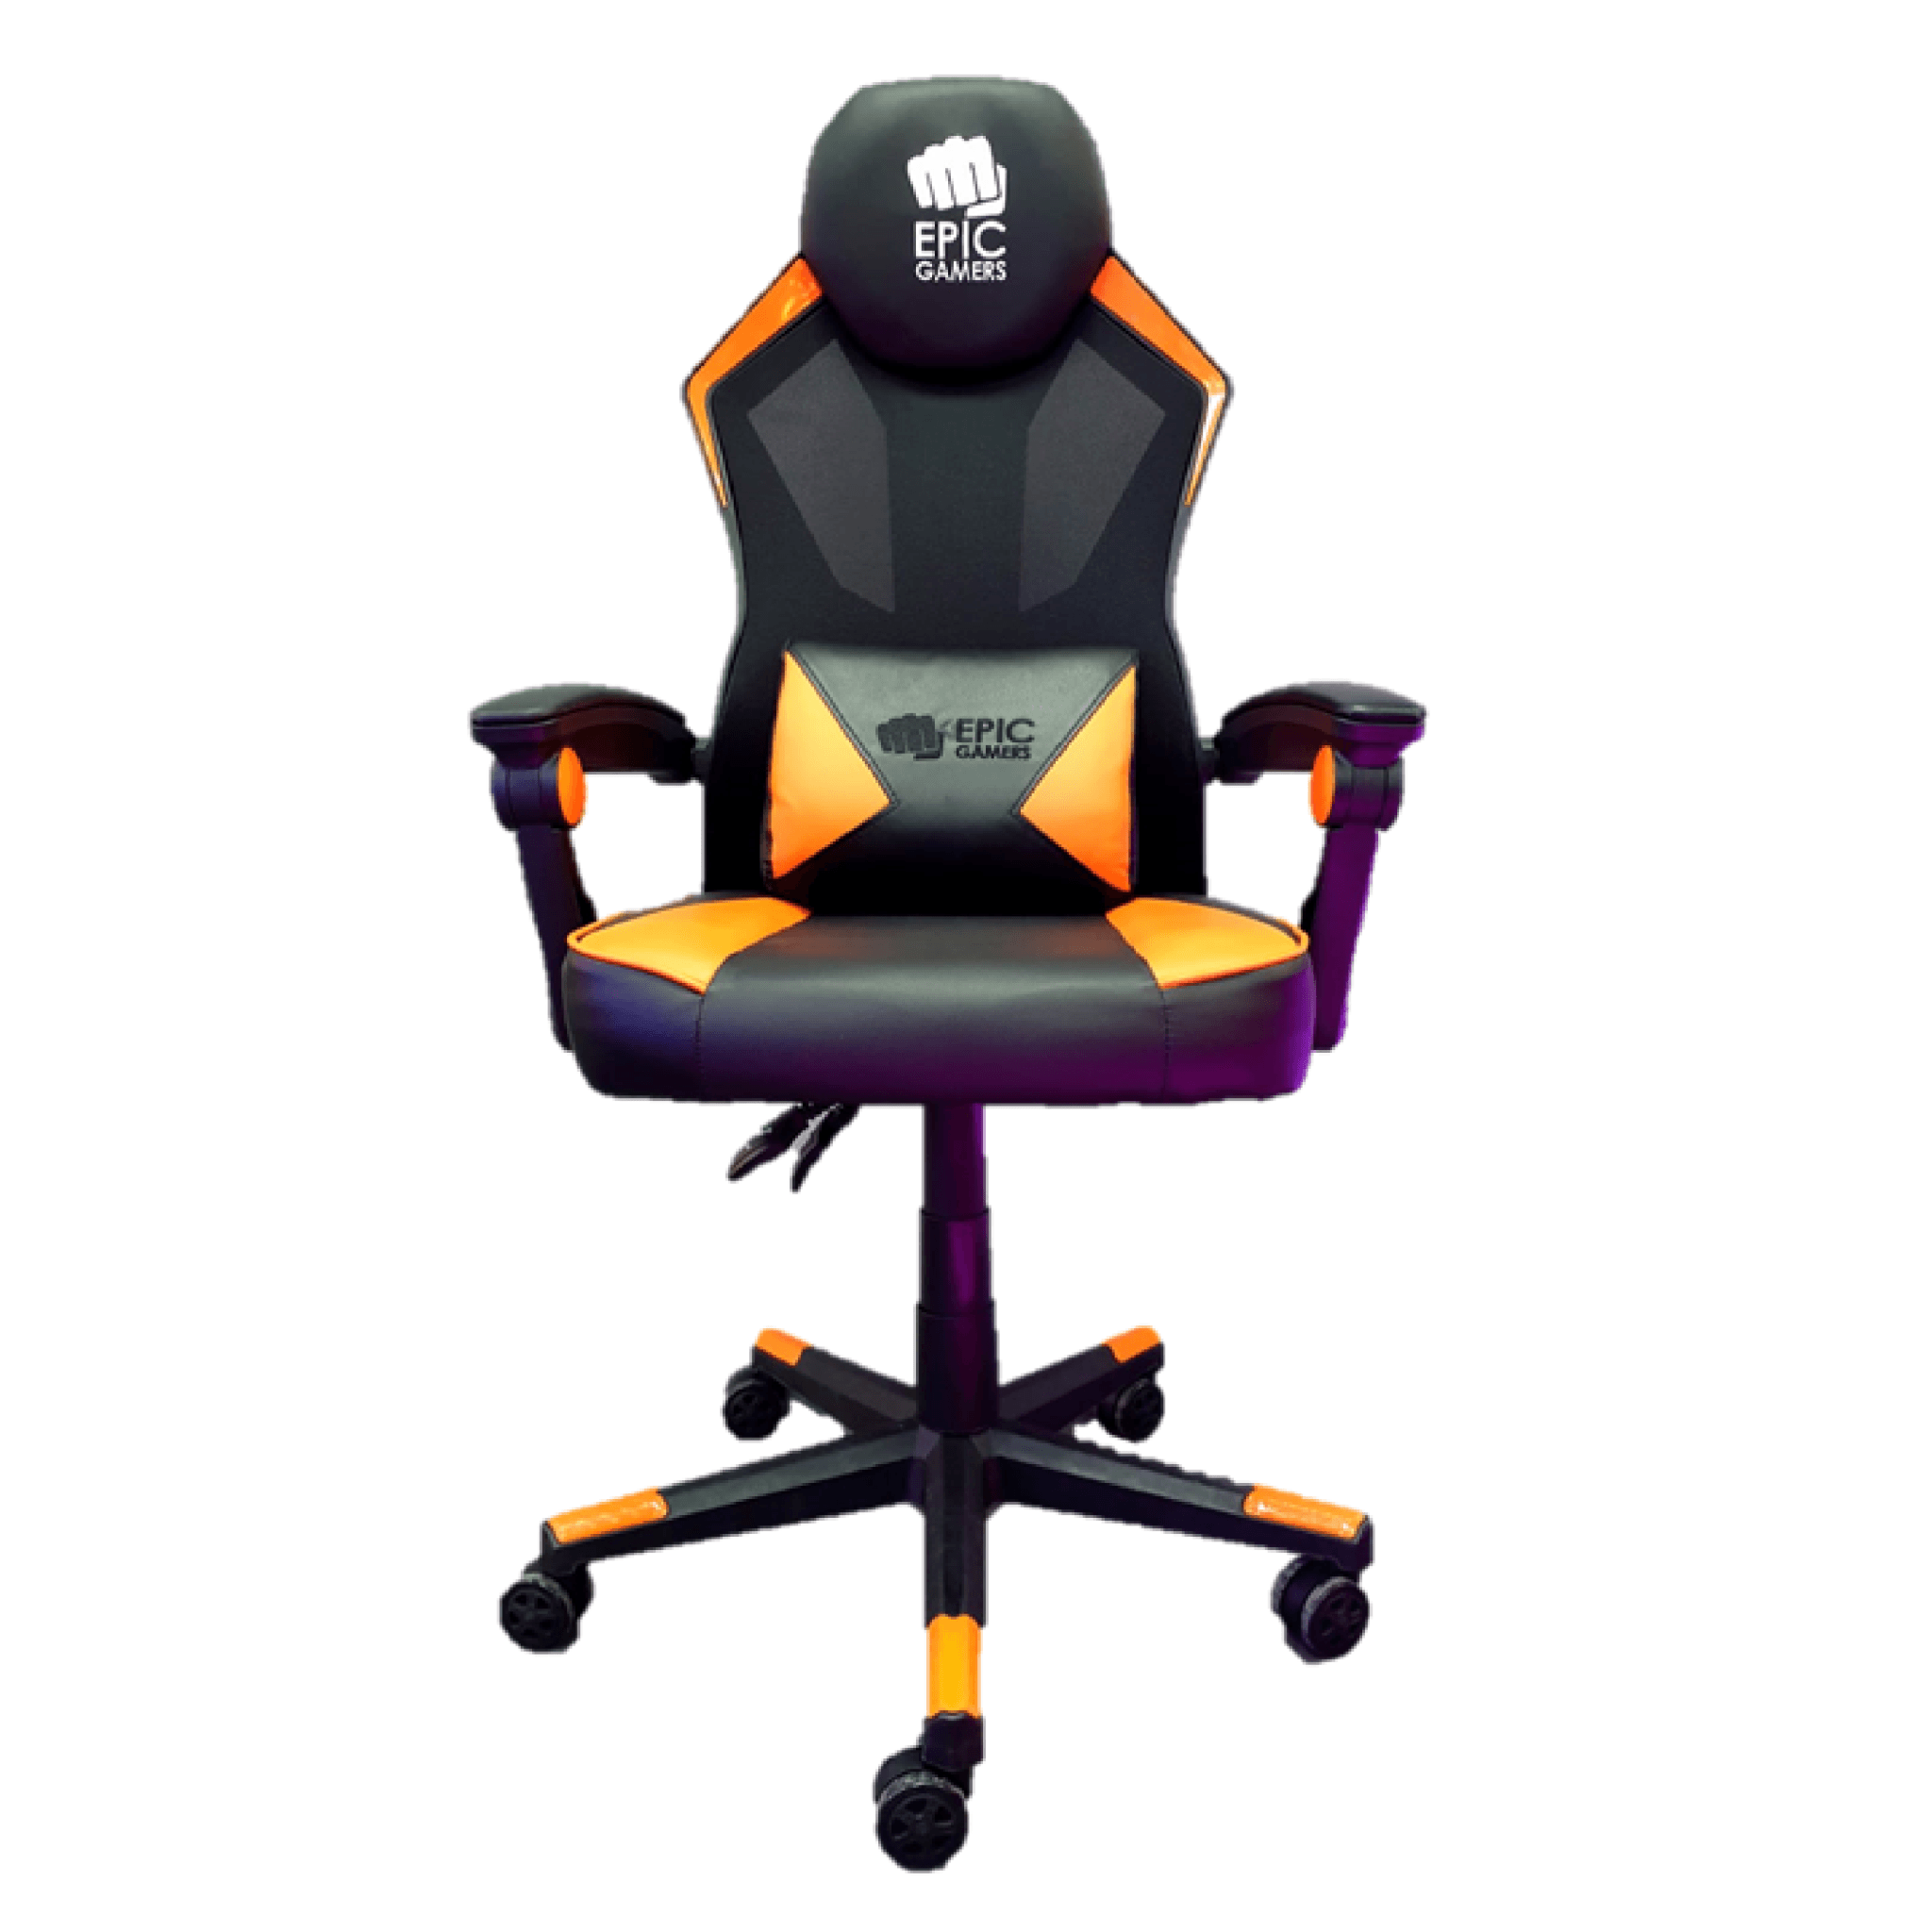 Epic Gamers Gaming Chair 001 - Black/Orange - Store 974 | ستور ٩٧٤